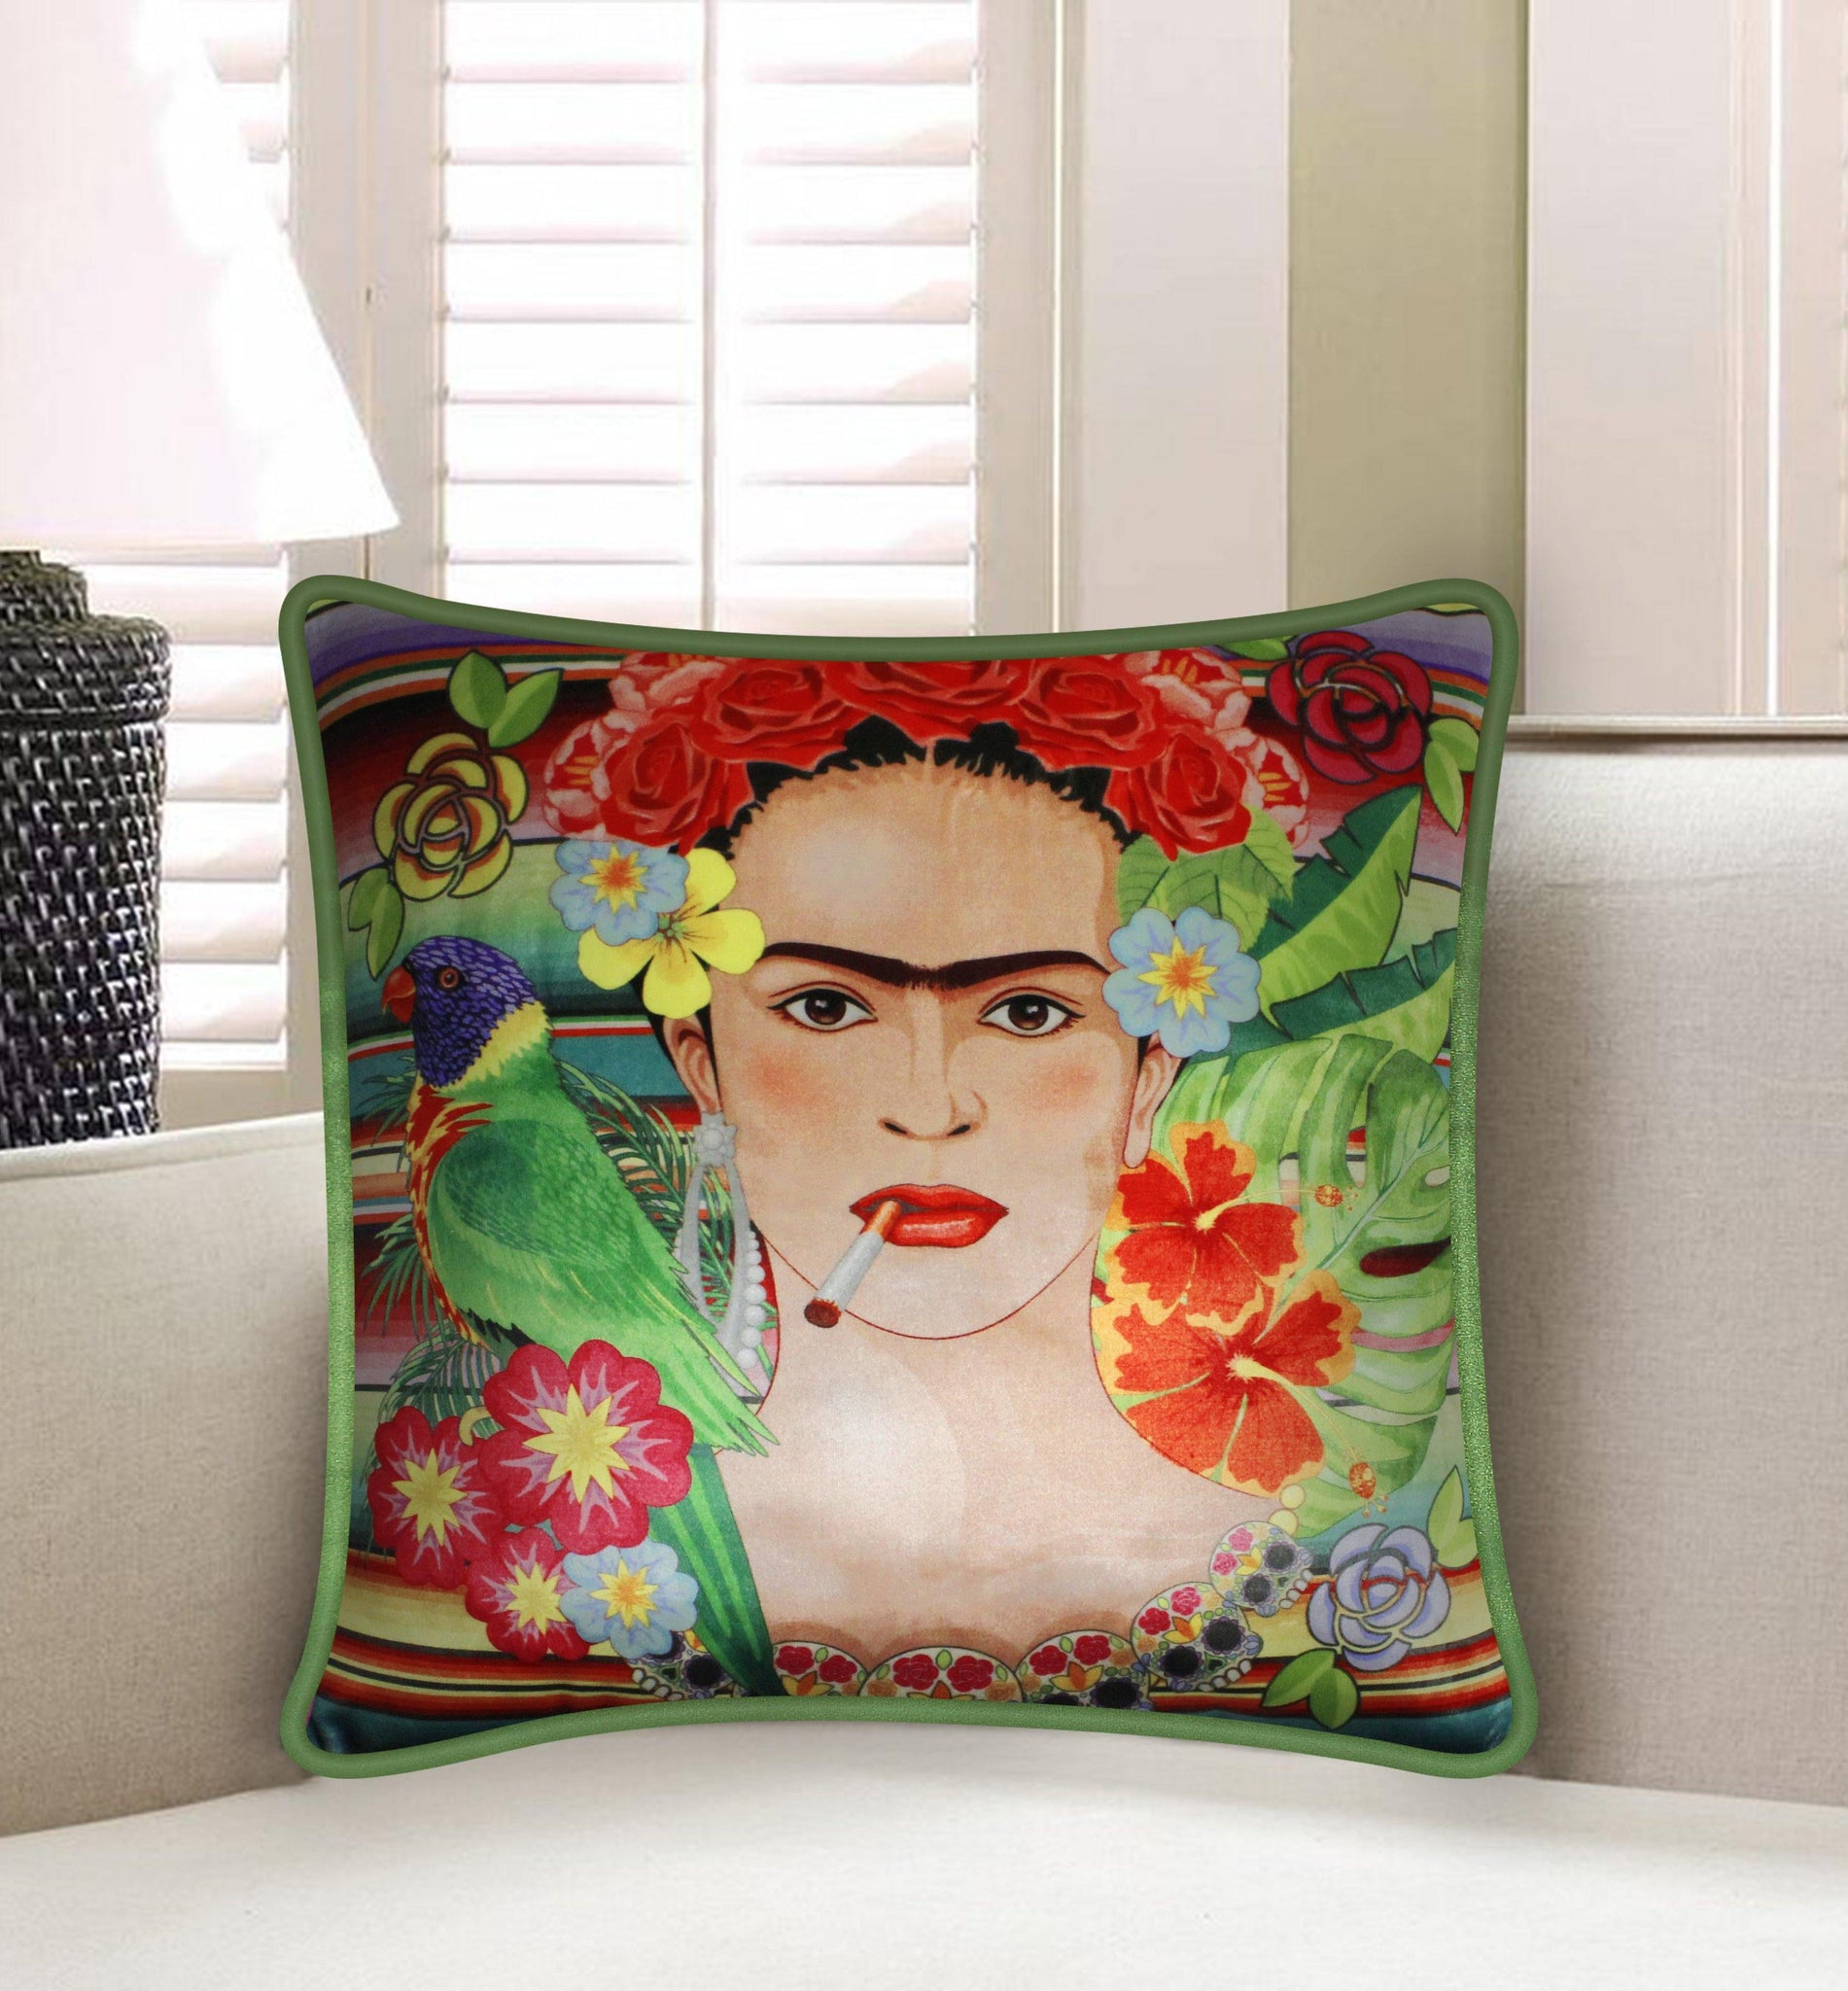  Velvet Cushion Cover, Frida Kahlo and Floral Decorative Pillowcase, Modern Home Decor Wysada for Sofa Chair Bedroom Living Room, Multicolor, 45x45cm, (18x18 Inches).